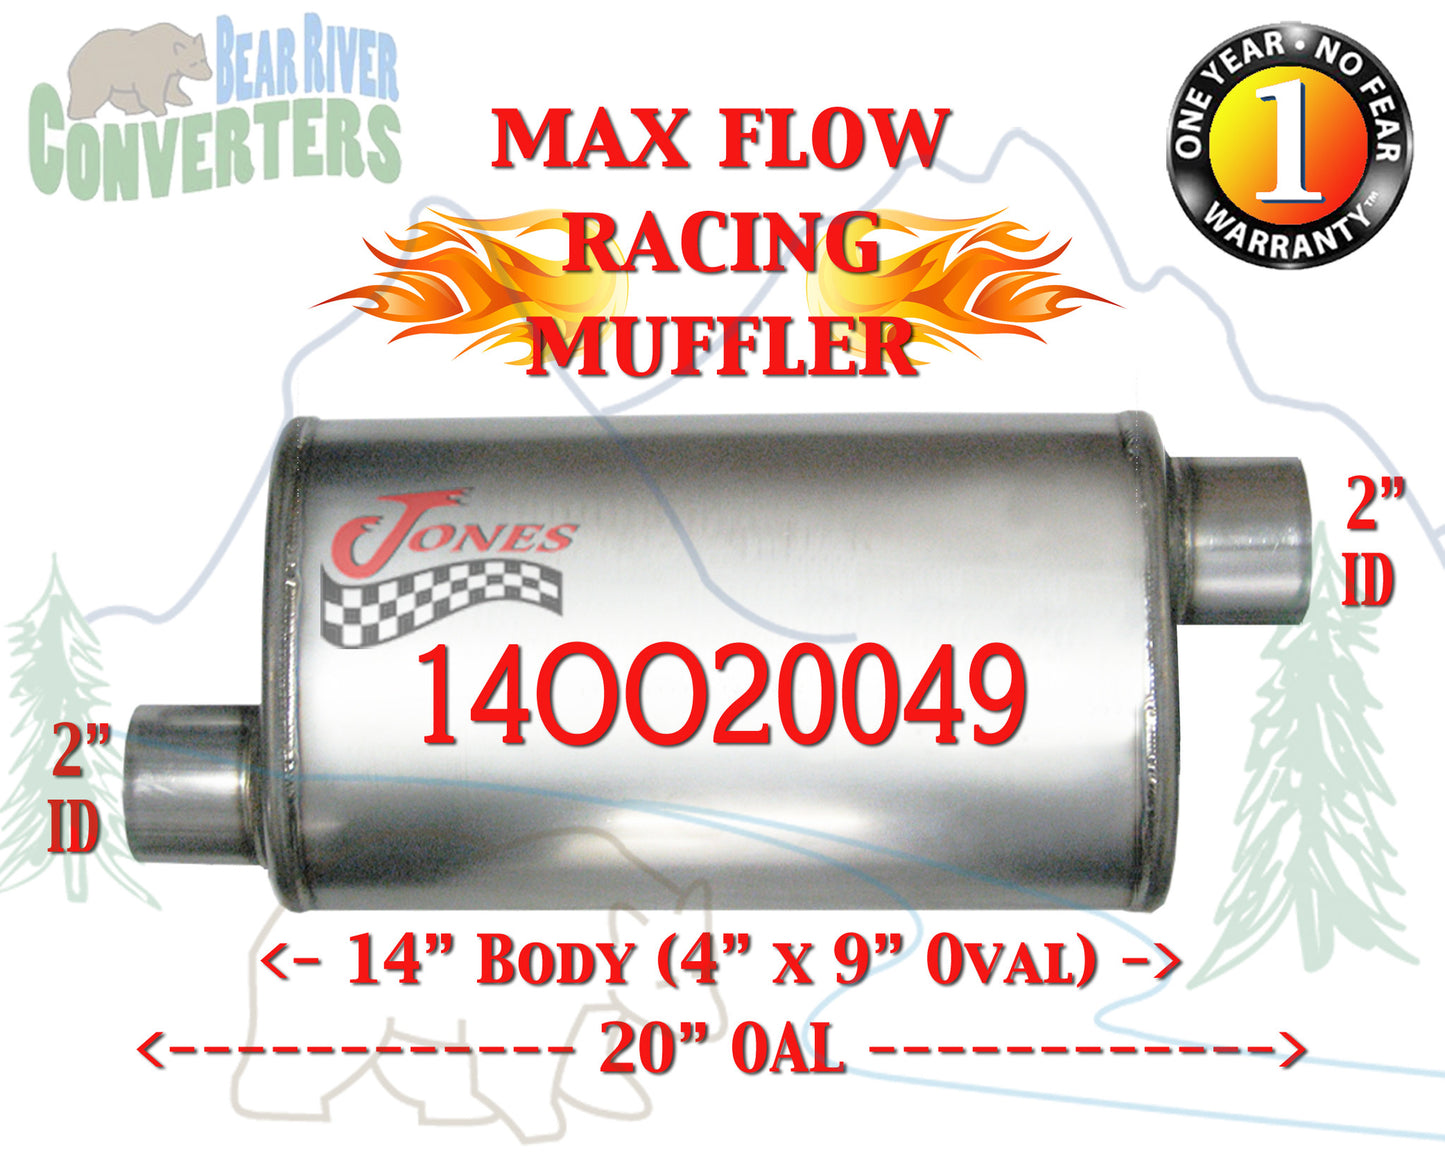 14OO20049 Jones MF1234 Max Flow Racing Muffler 14” Oval Body 2” Pipe Offset/Offset 20” OAL - Bear River Converters